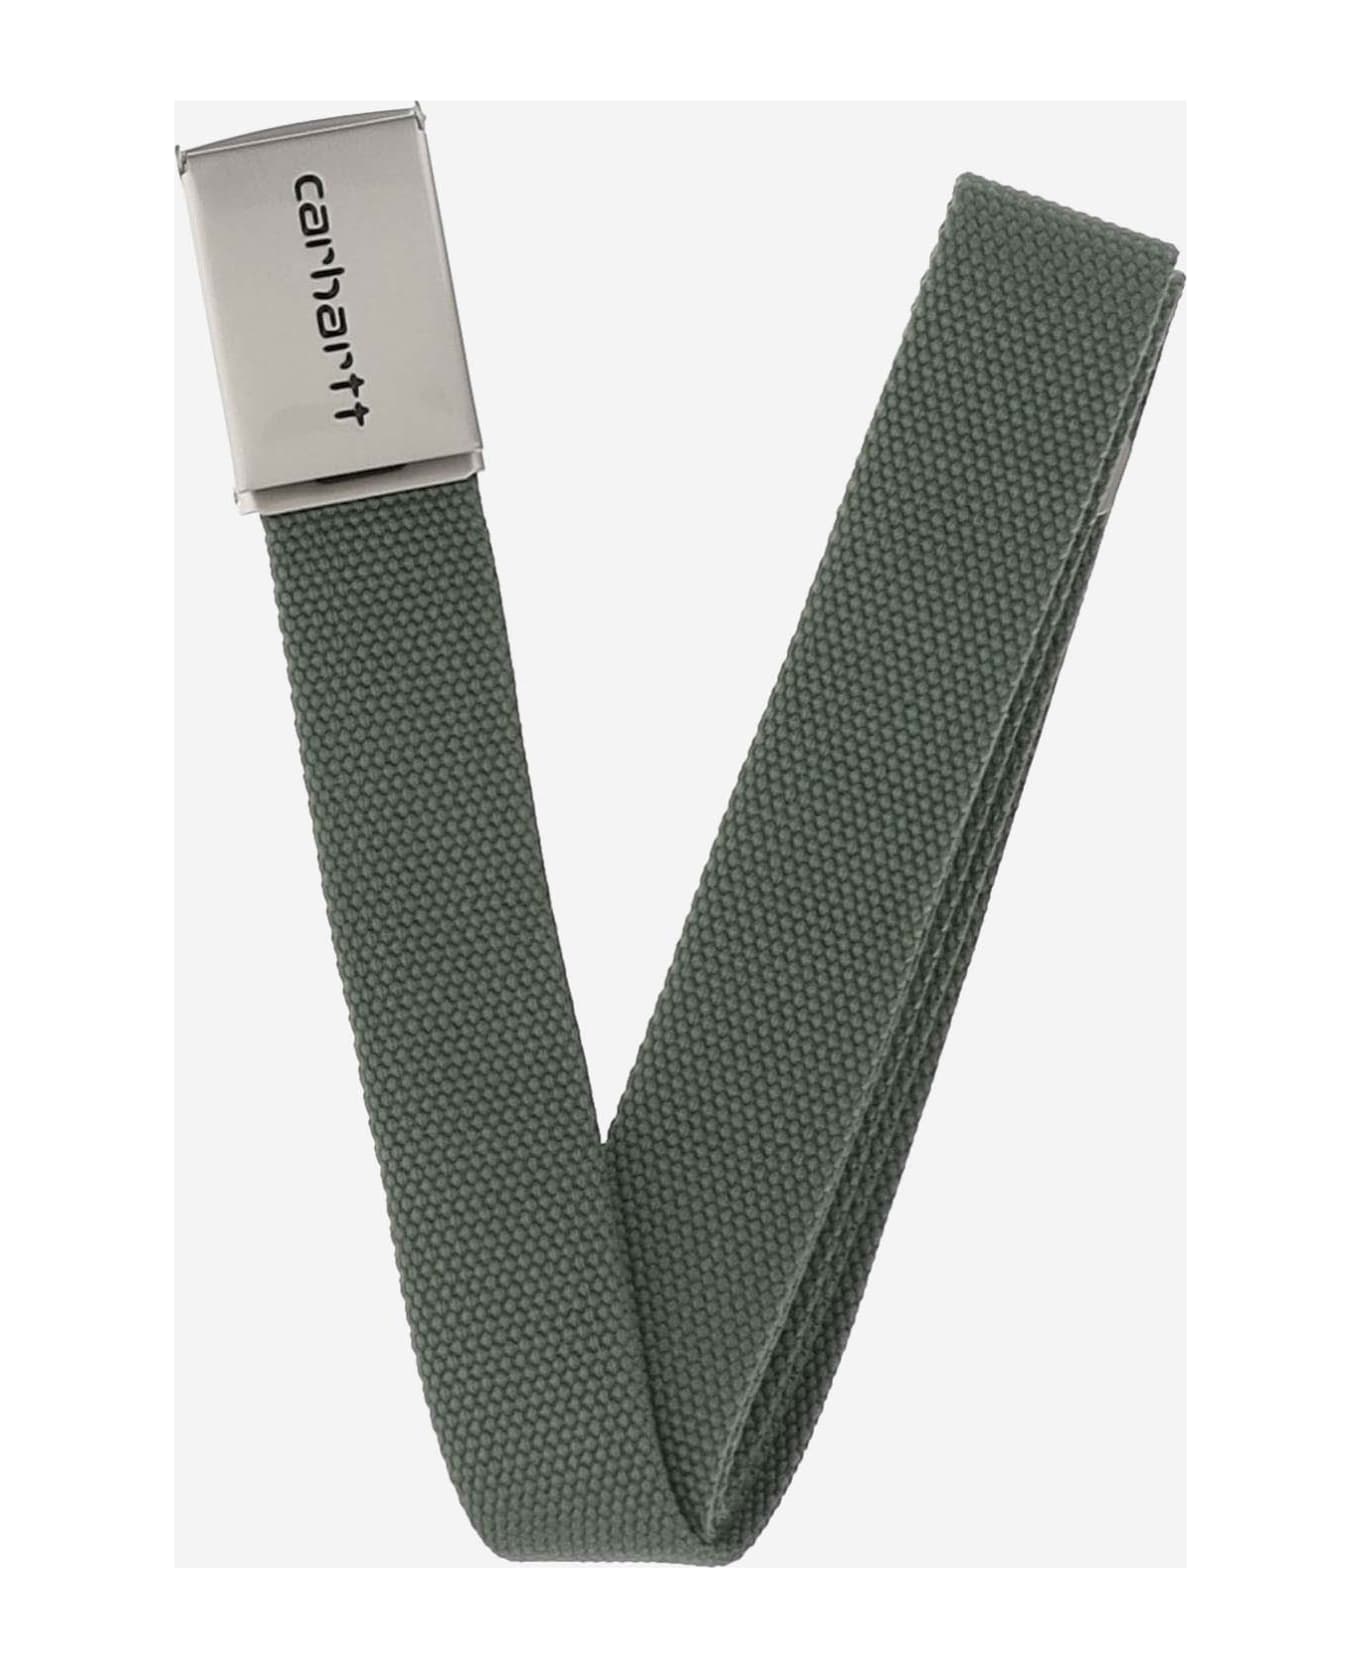 Carhartt Technical Fabric Belt With Logo - Military